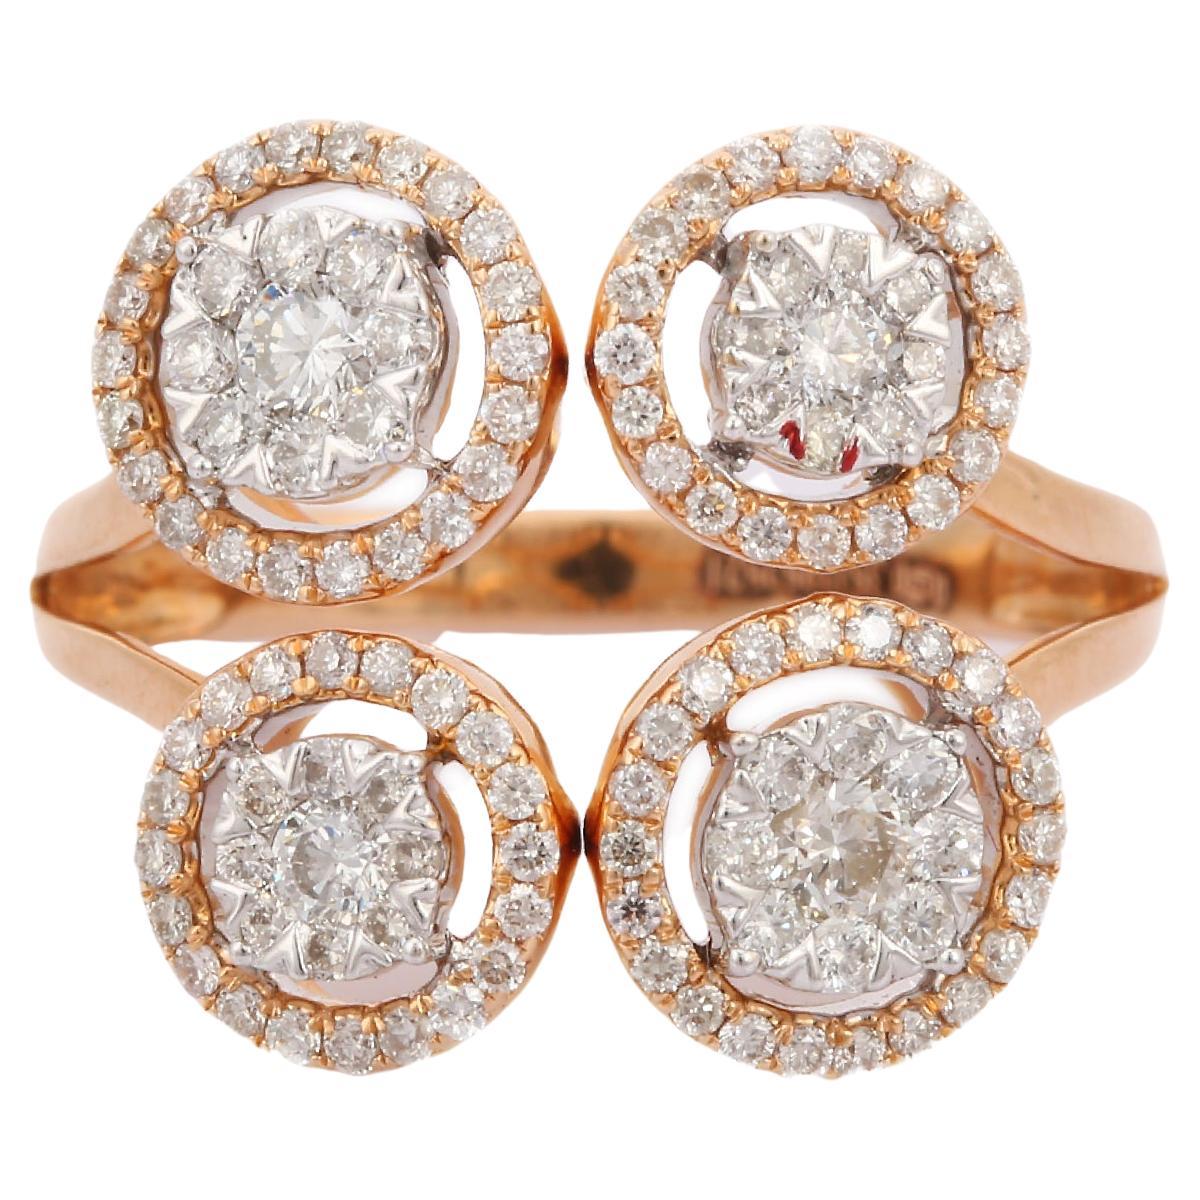 Bague de mariage grappe de diamants en or rose massif 18 carats